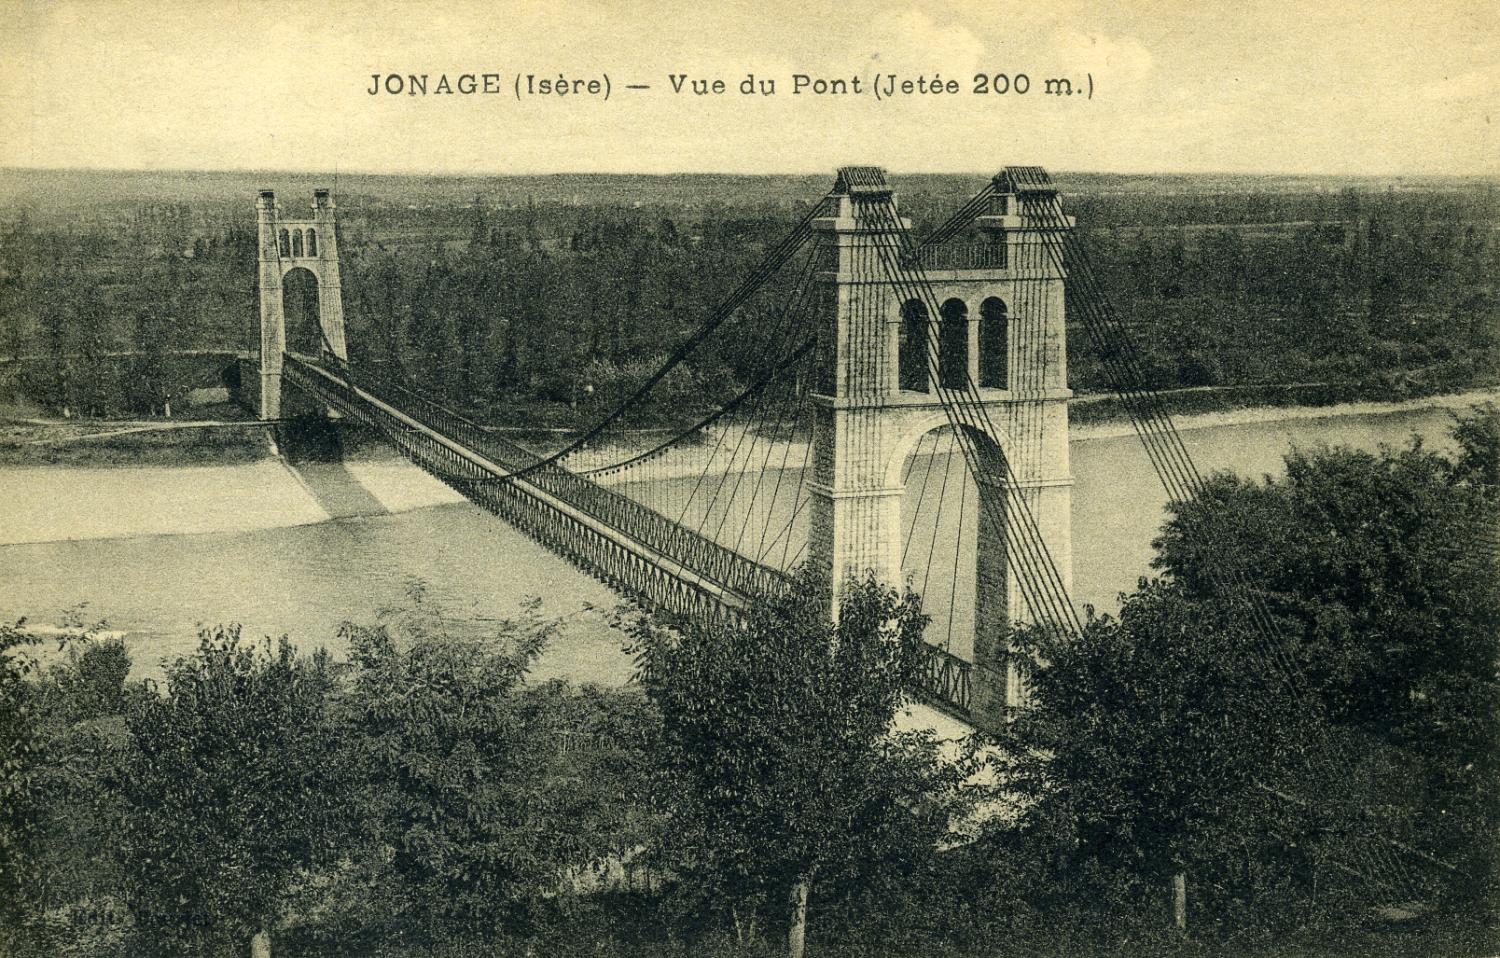 Jonage (Isère)